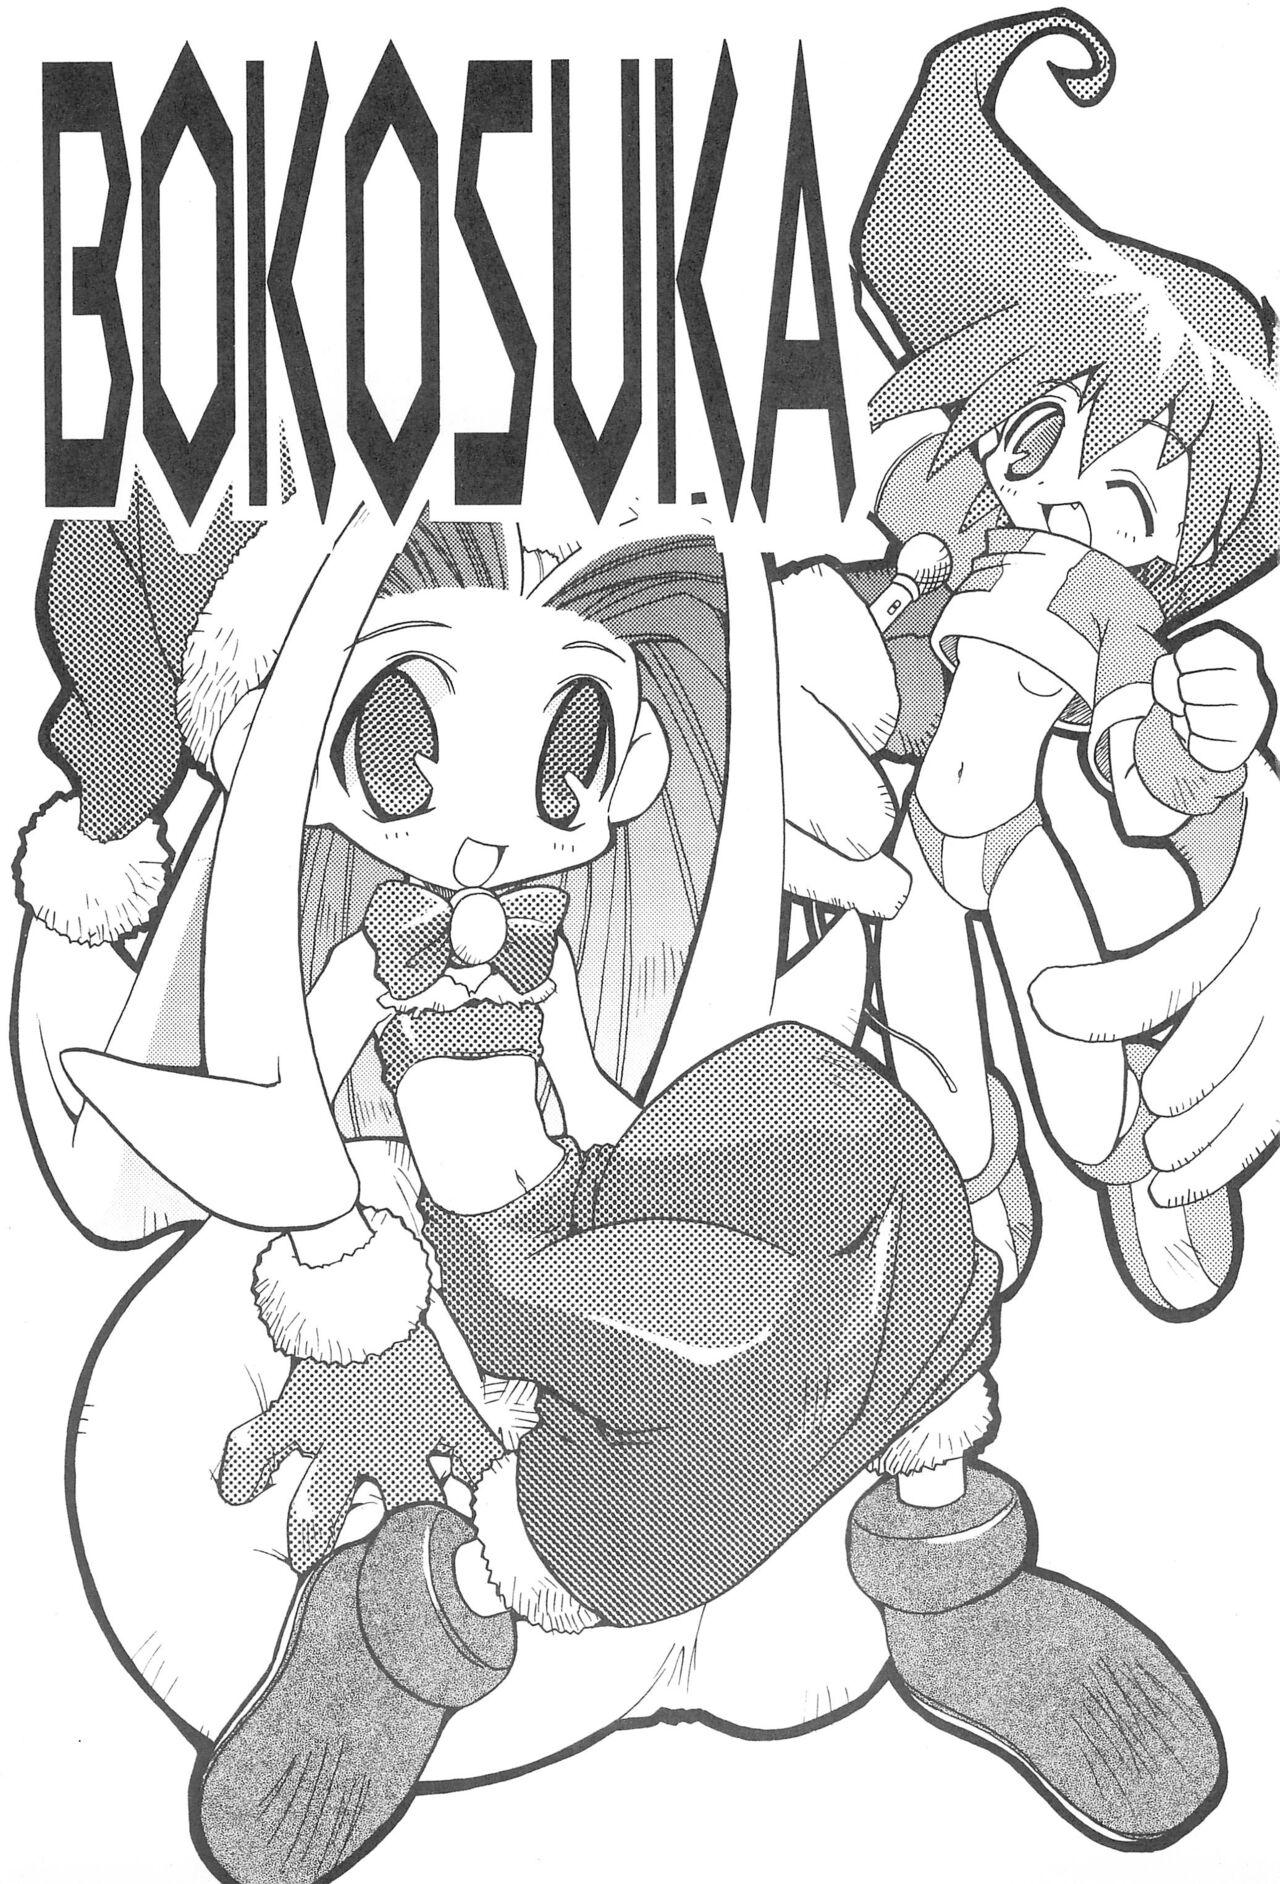 Bra BOKOSUKA Juicy - Page 3